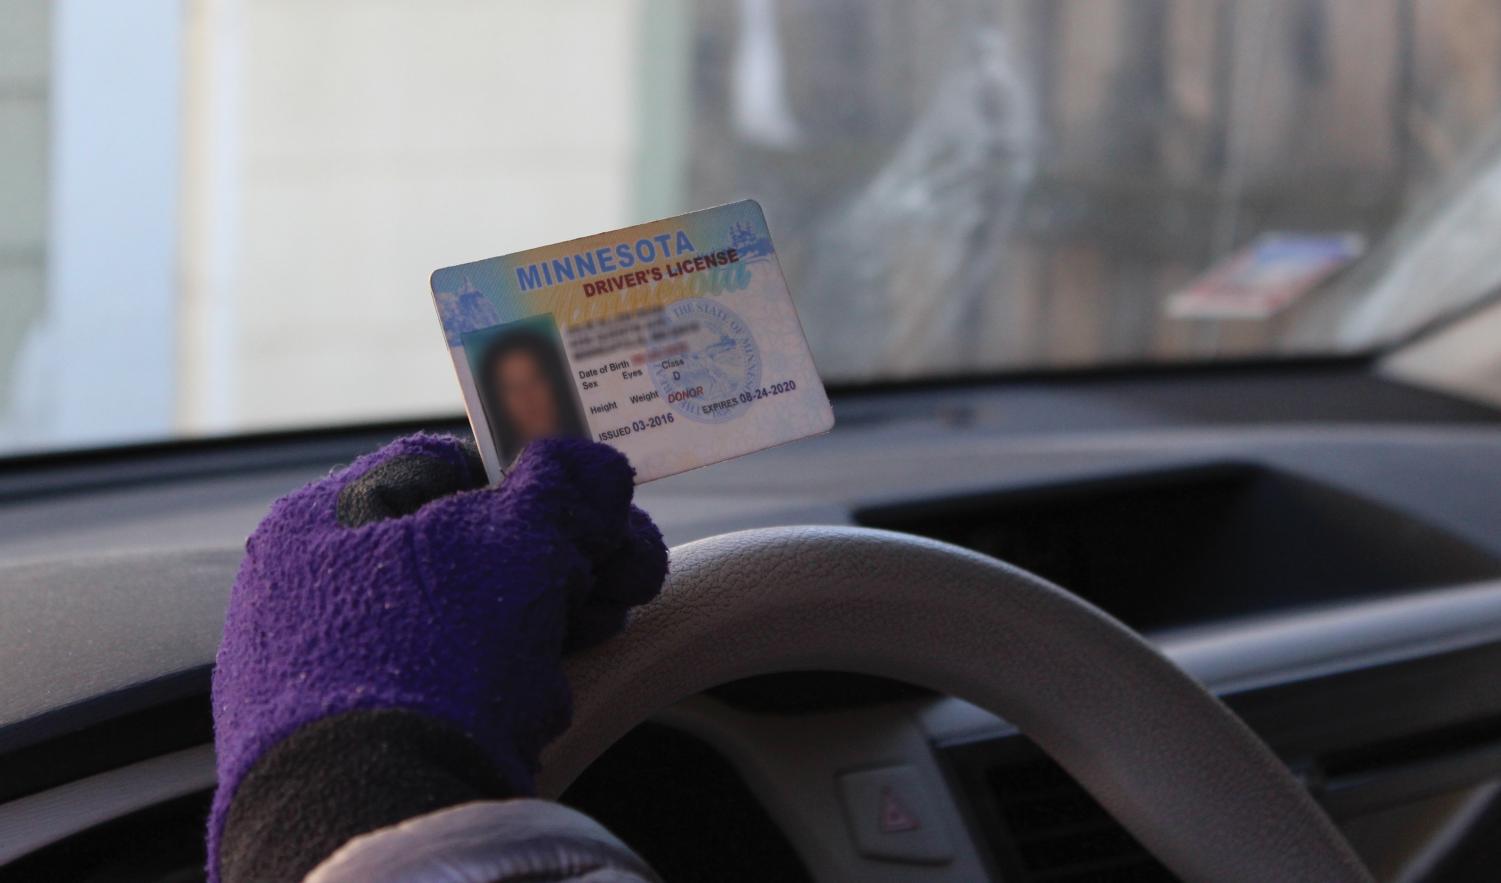 Minnesota drivers license status 20018